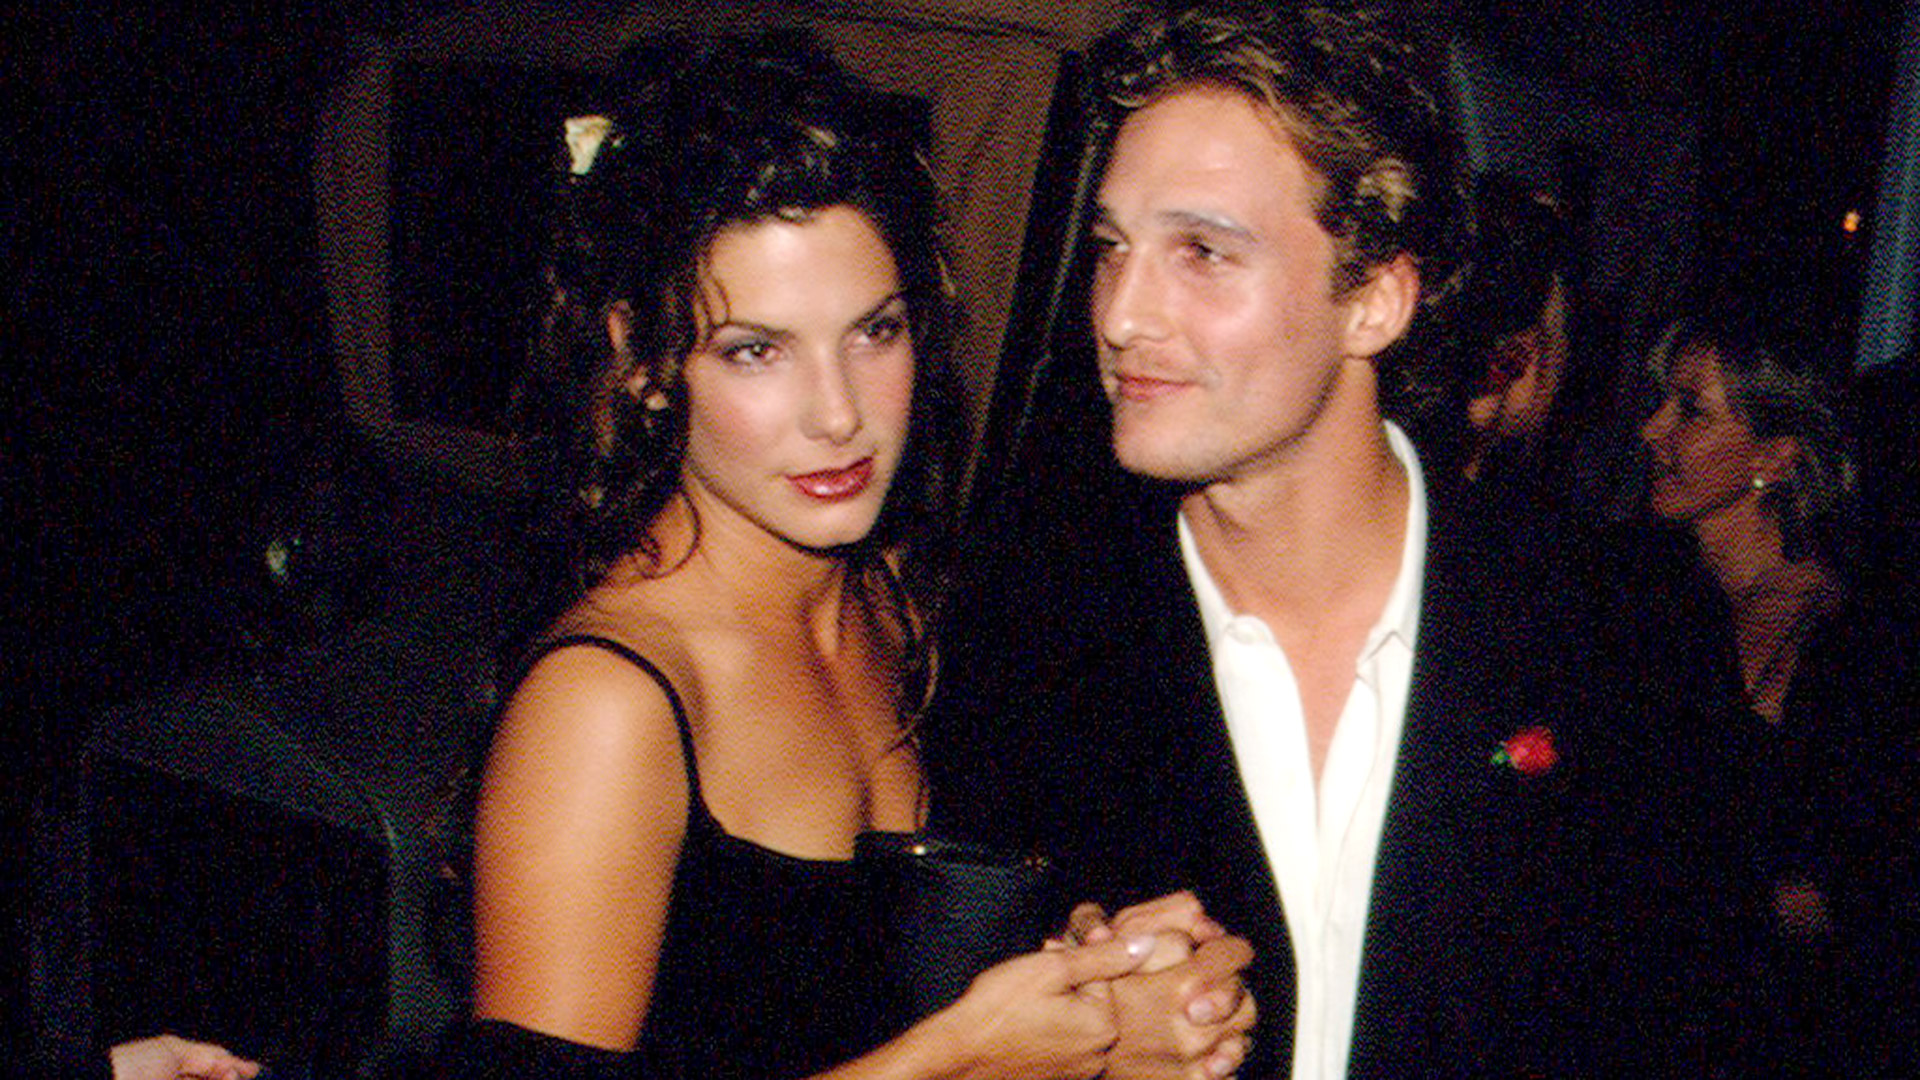 Sandra Bullock y Matthew McConaughey en la premiere de “In love and war”, en 1997 (Photo by Frank Trapper/Corbis via Getty Images)